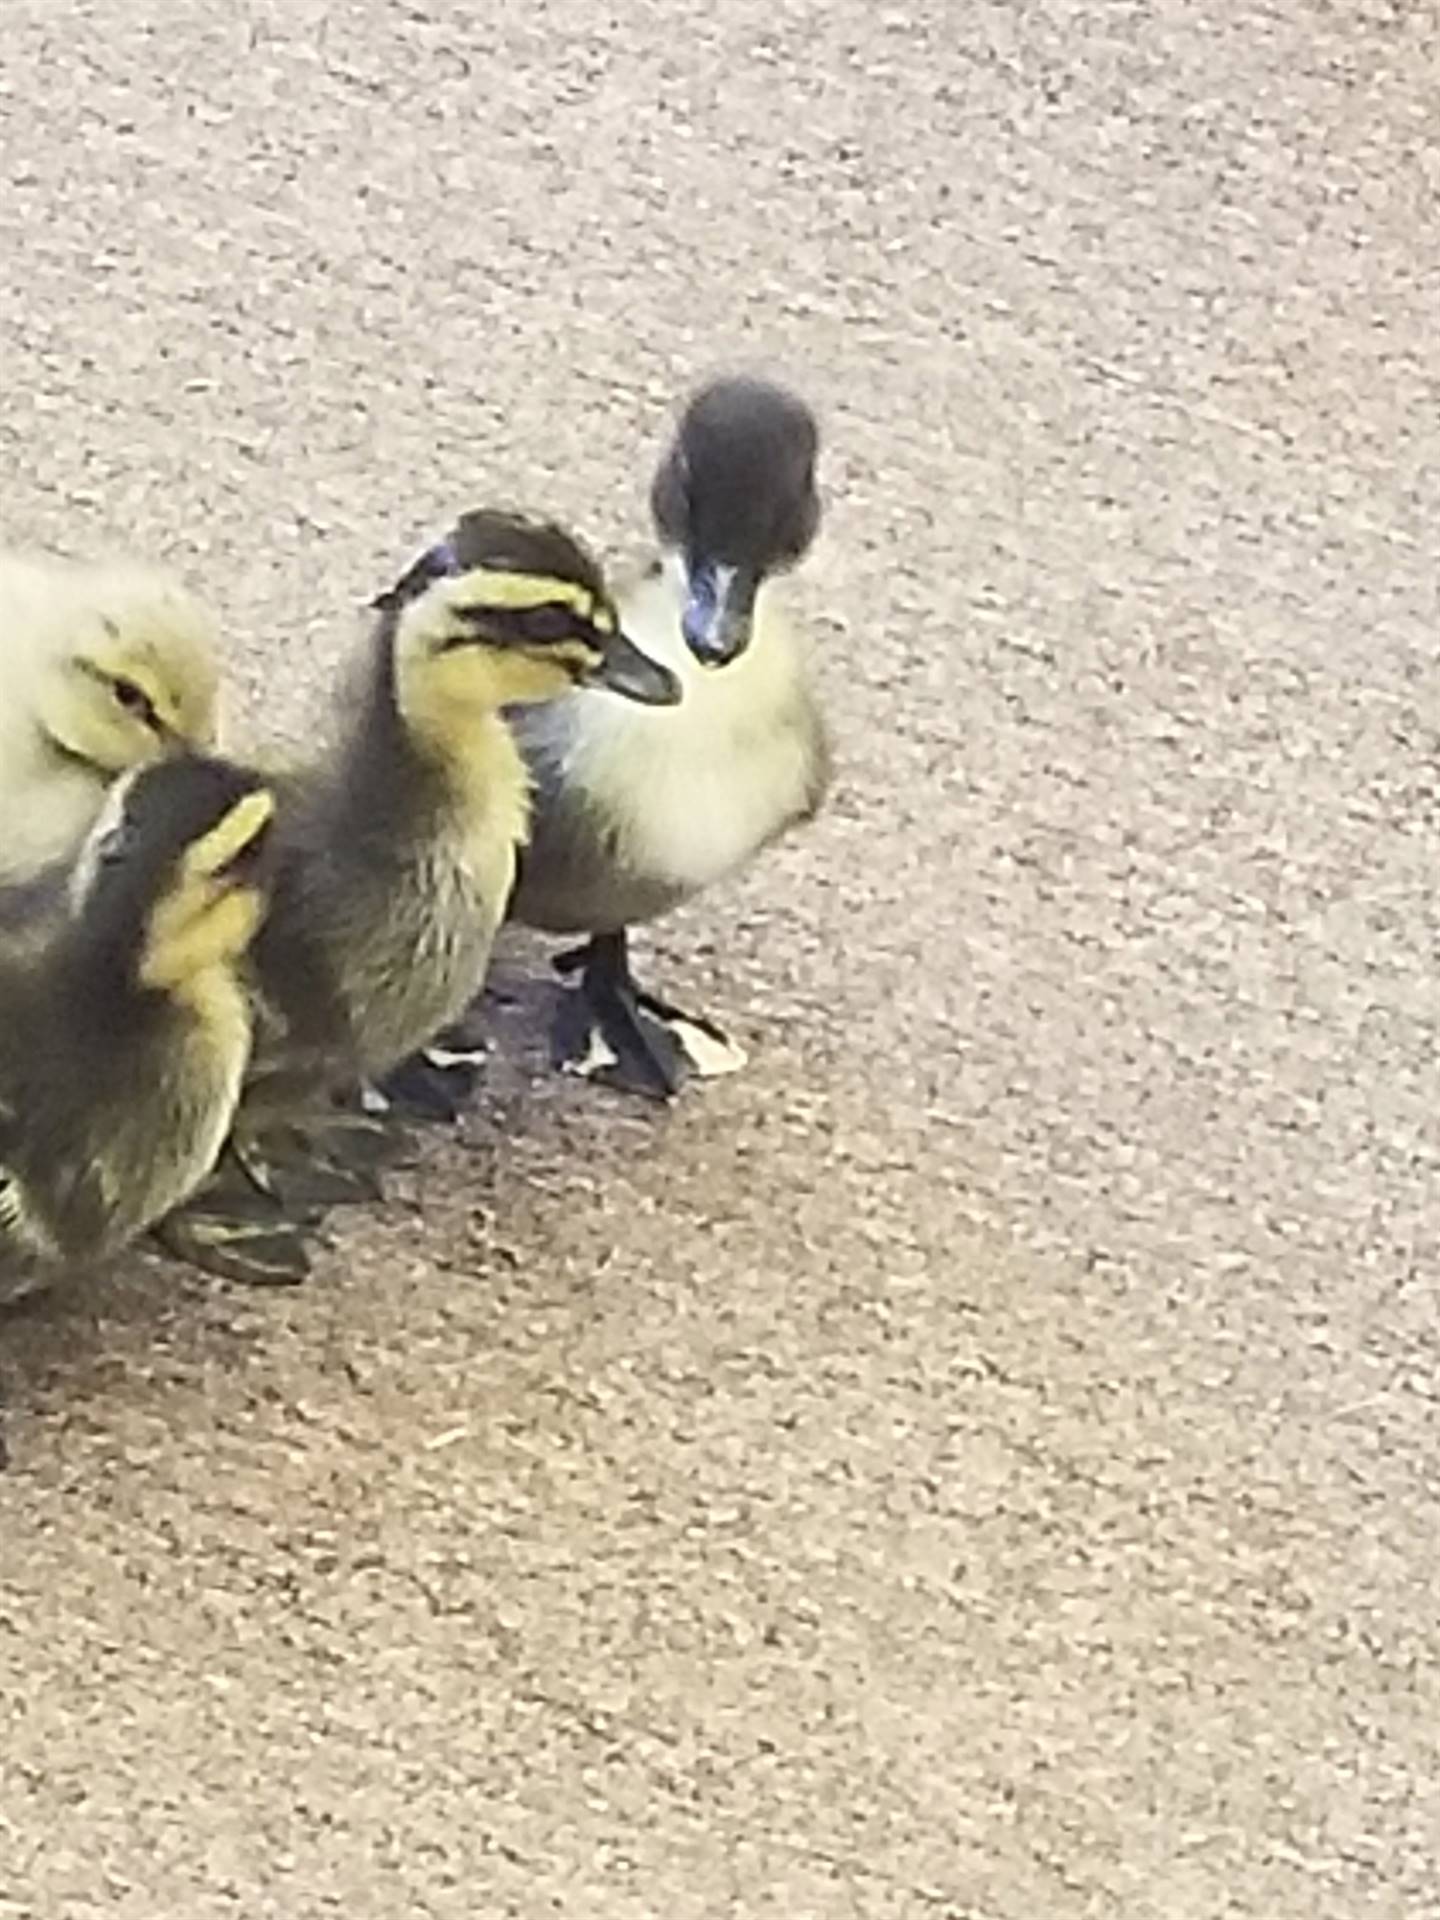 ducklings walking together